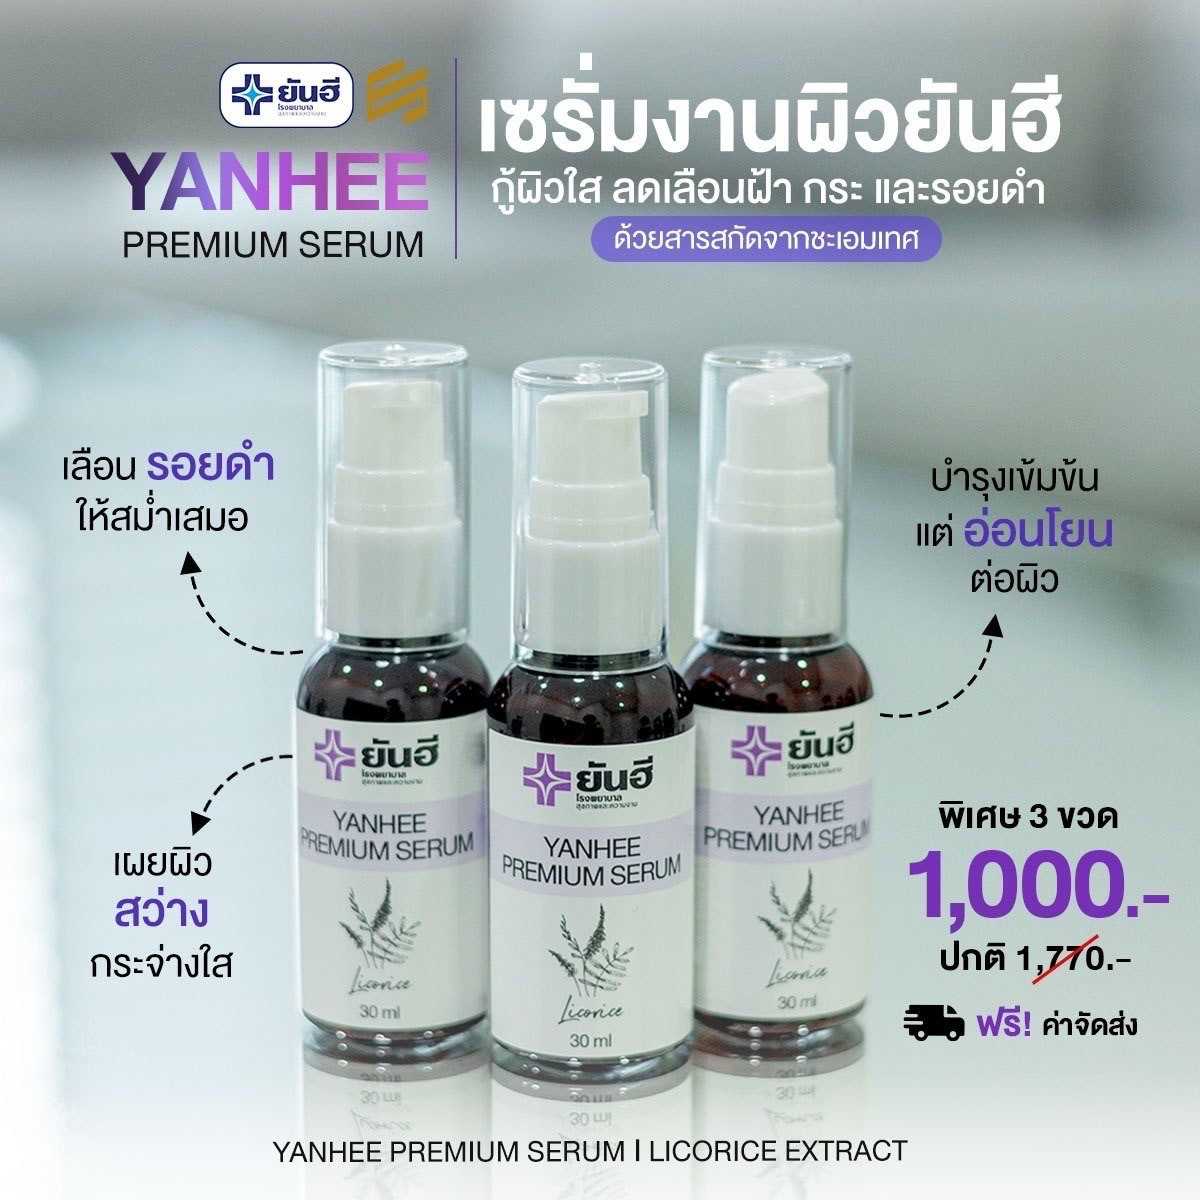 Yanhee Premium Serum 3 ขวด (ฟรีค่าจัดส่ง มูลค่า 50 บาท)